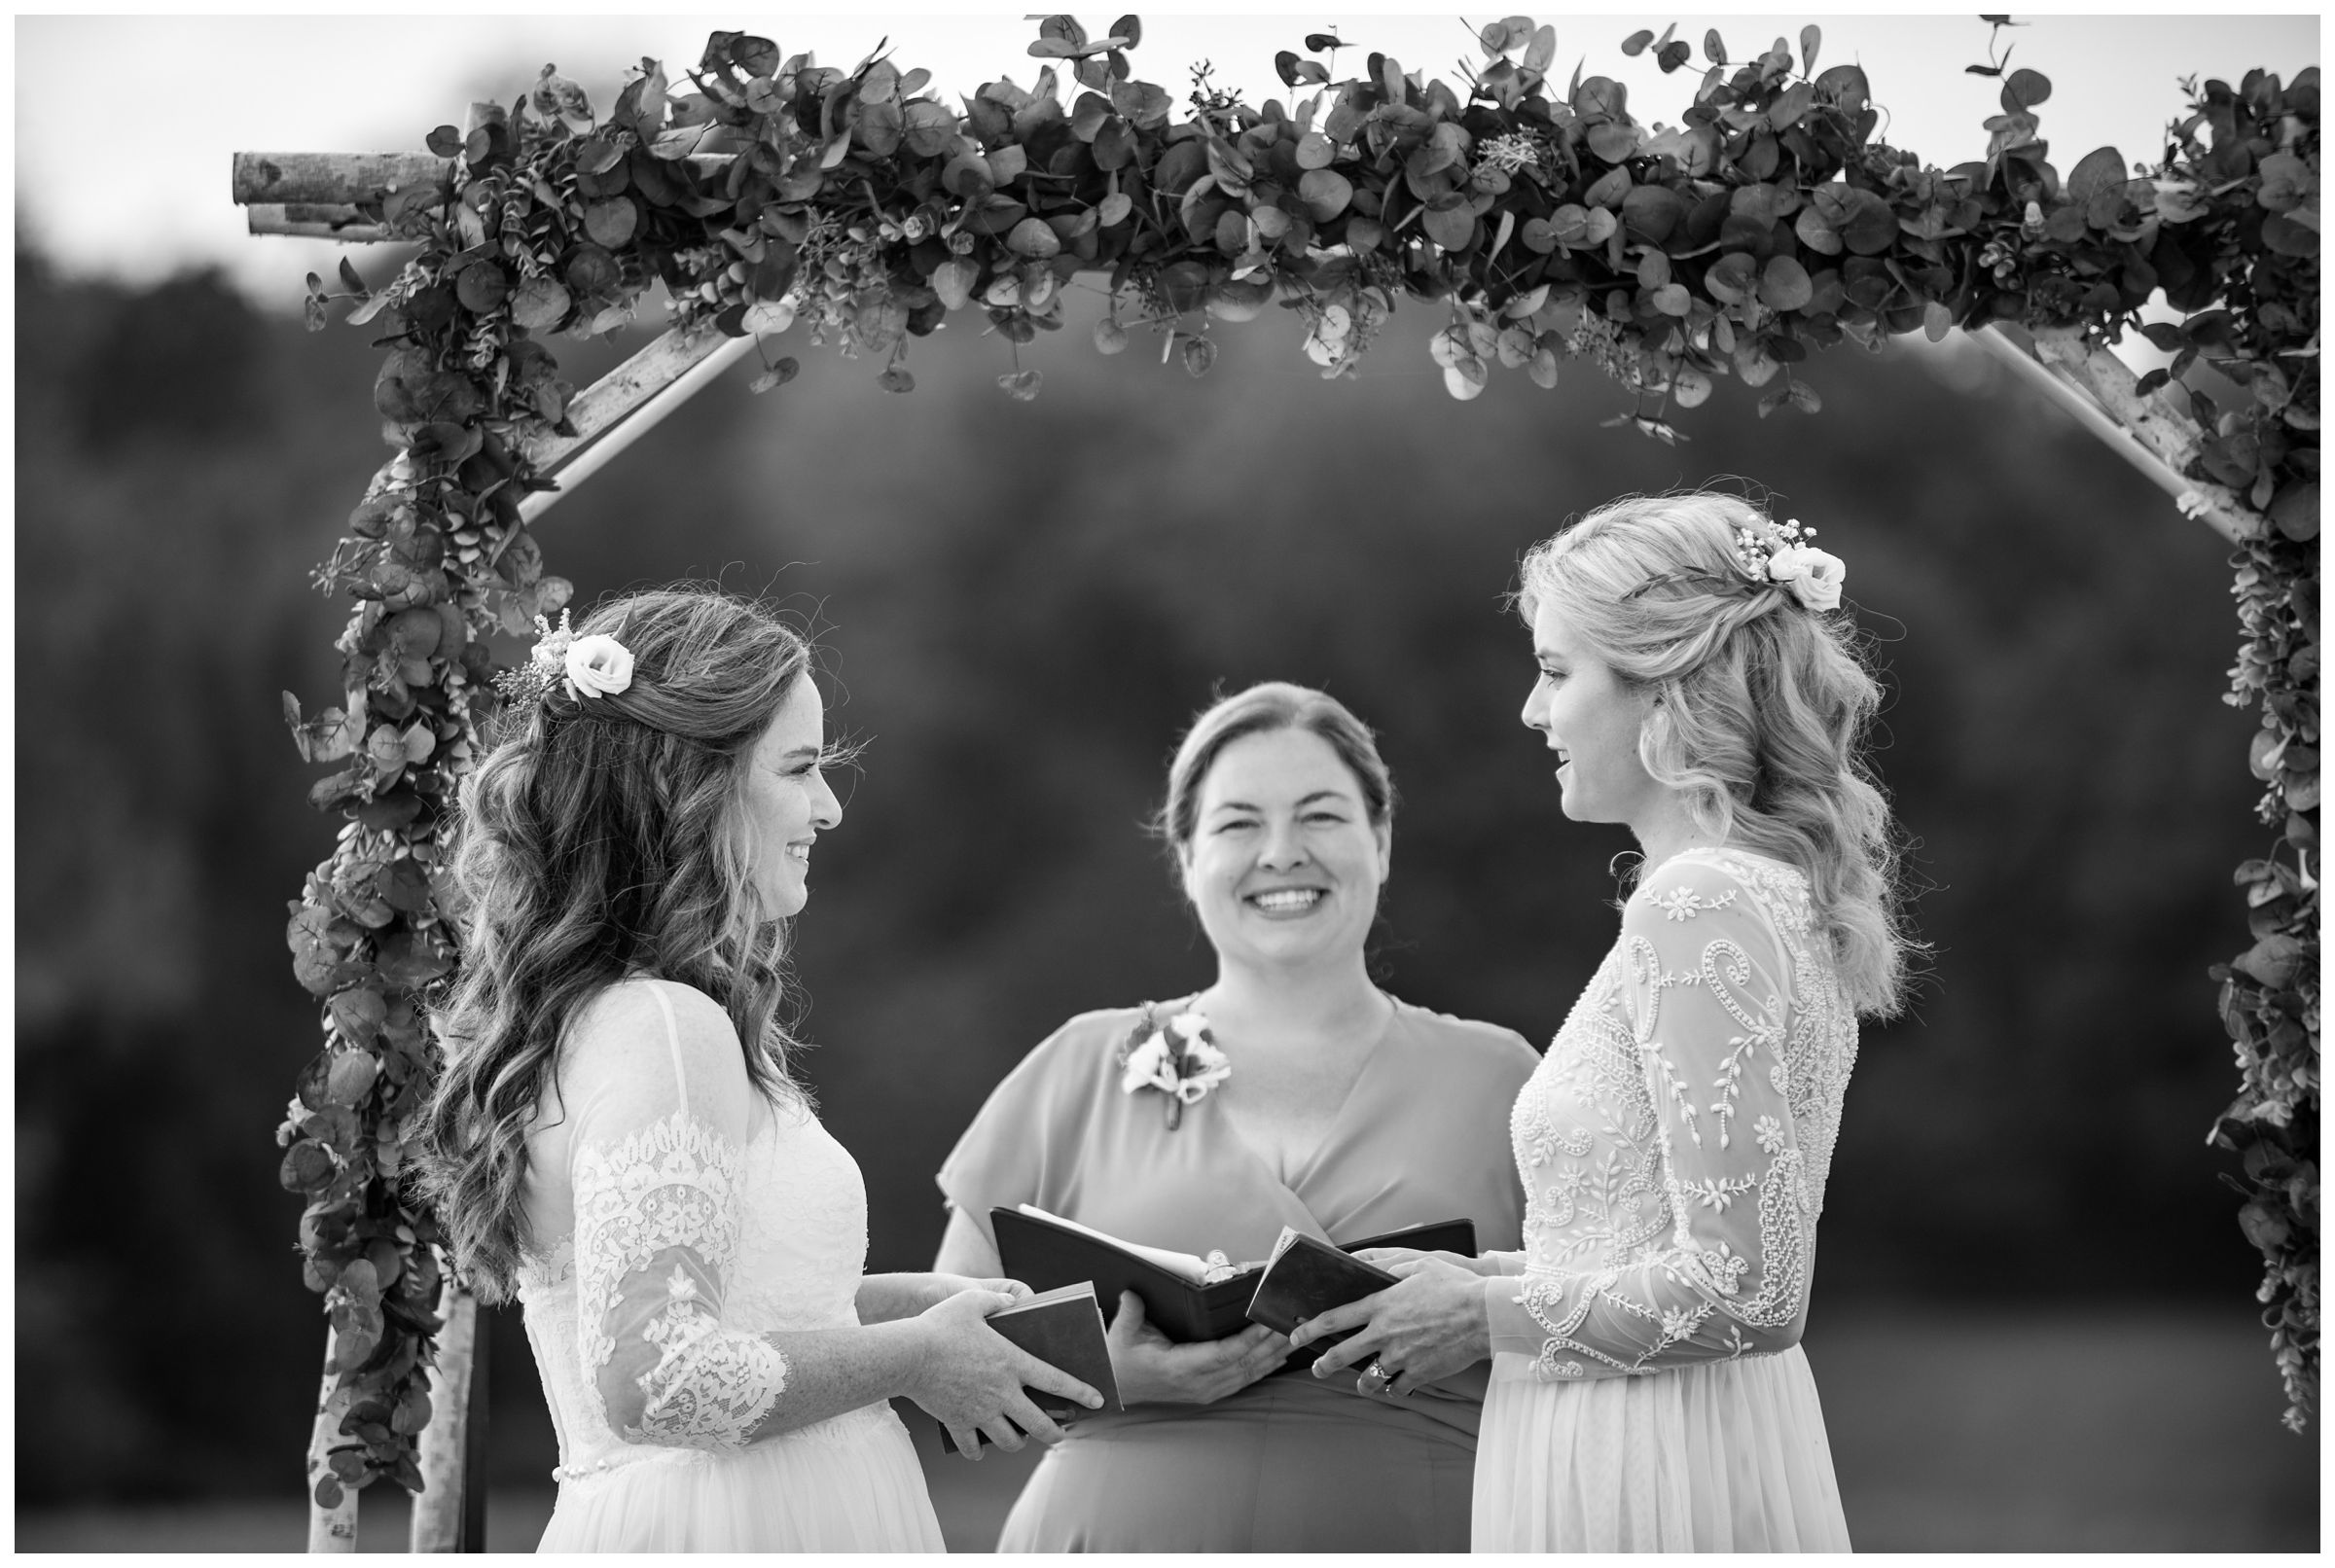 Two brides exchange vows during same-sex wedding.